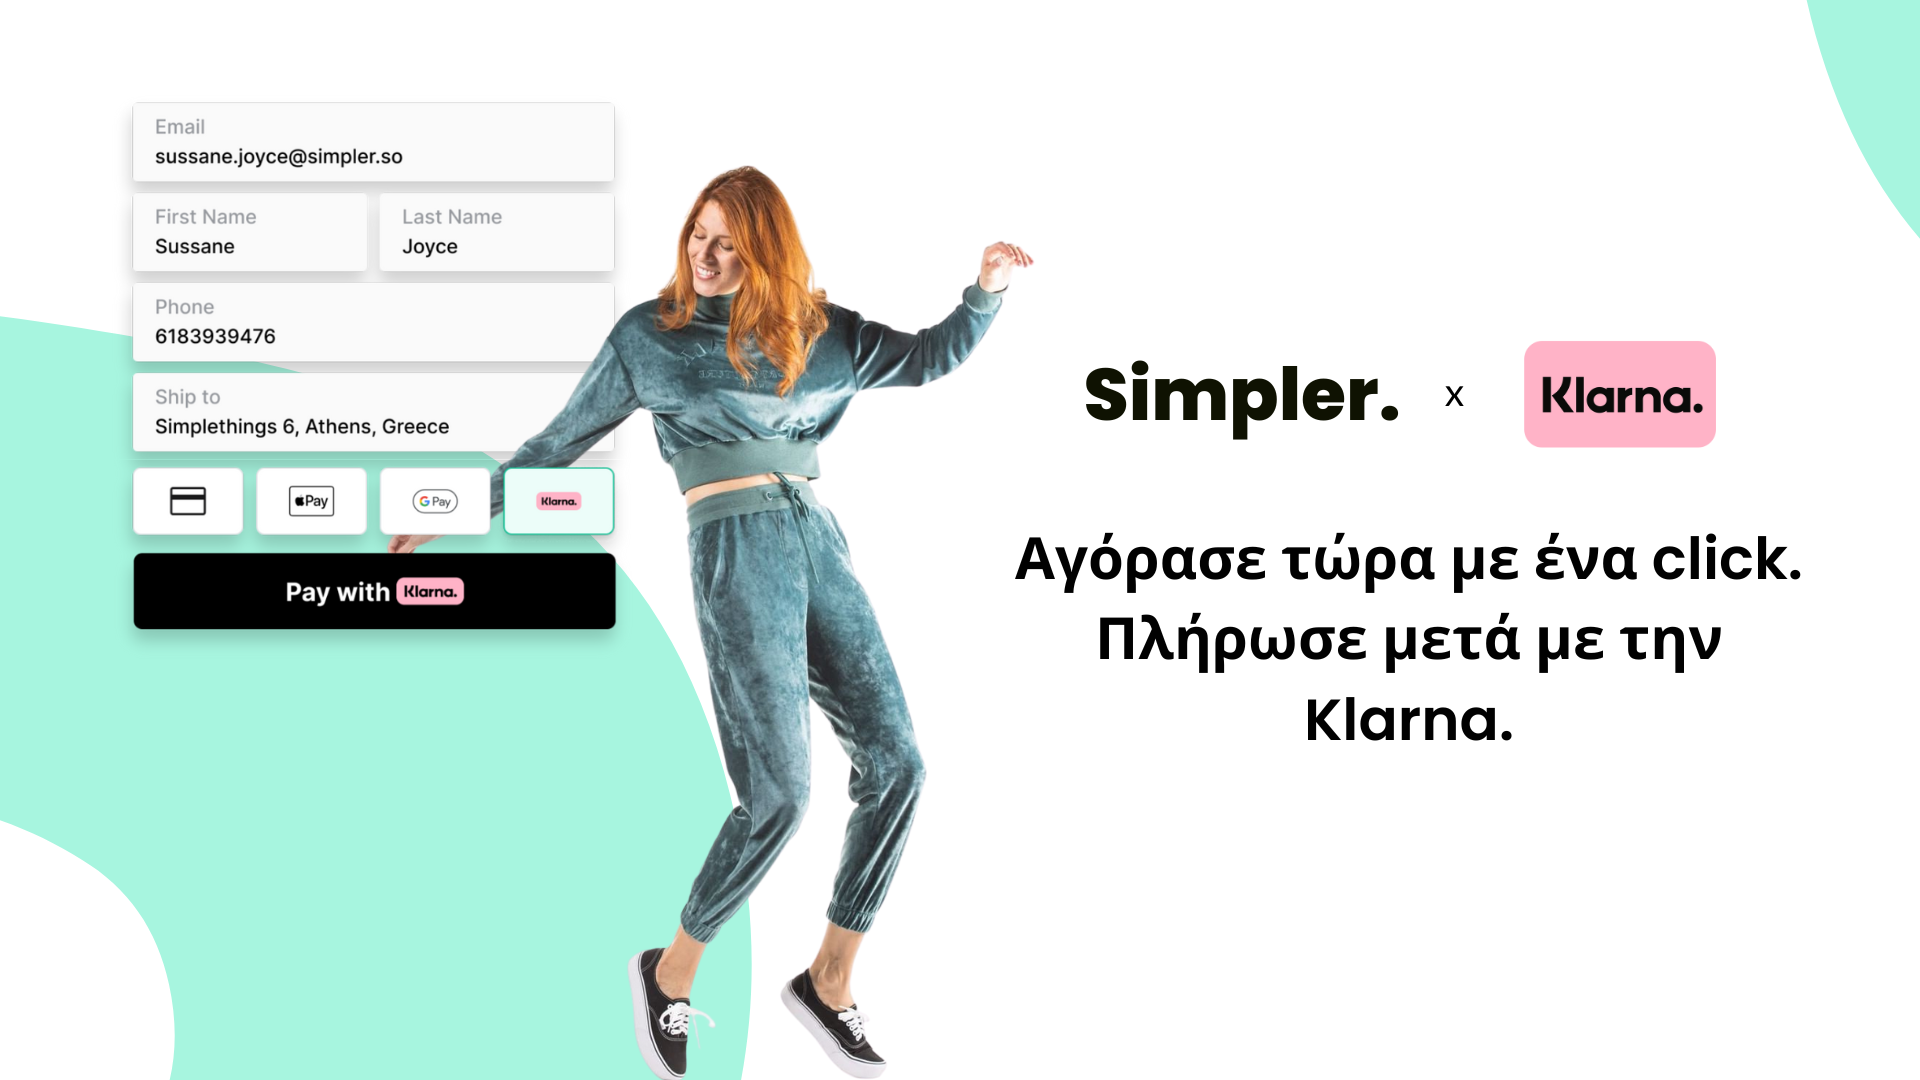 Simpler X Klarna: Μια συνεργασία με όραμα μία νέα, φιλική και βιώσιμη εποχή στο ηλεκτρονικό εμπόριο